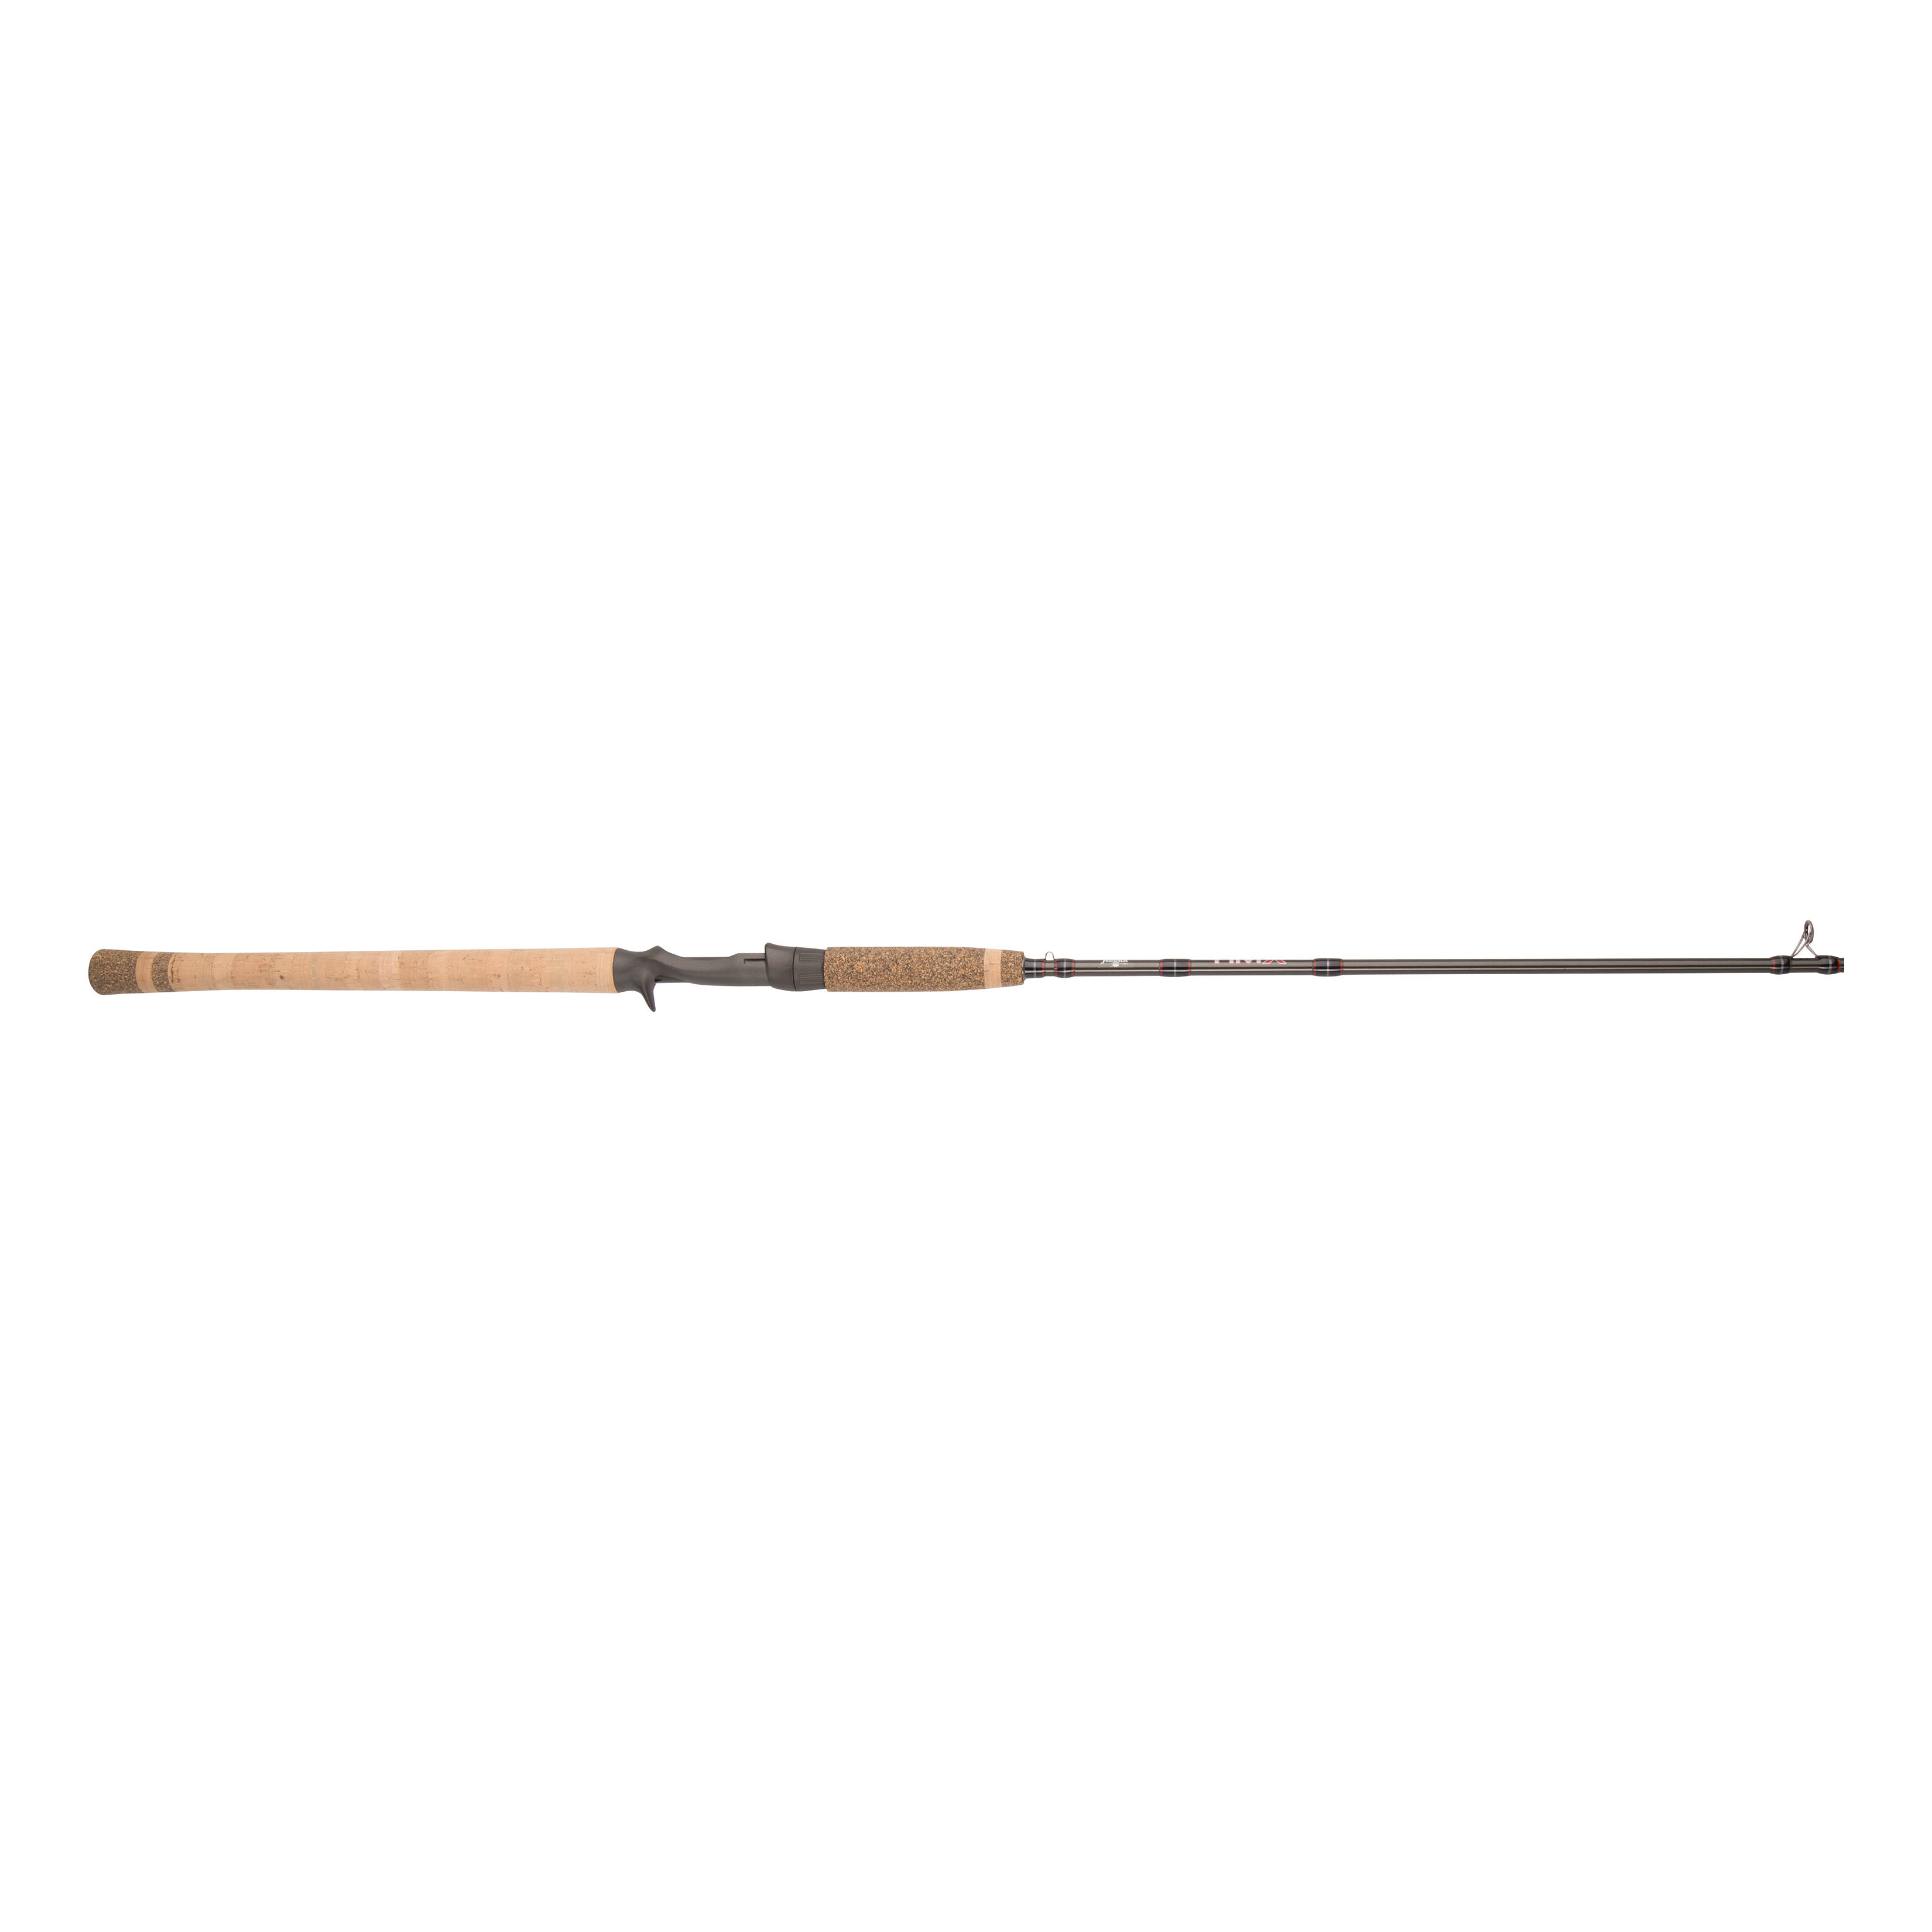 Fenwick Eagle Salmon/Steelhead Spinning Rod Review // Fishing Rod